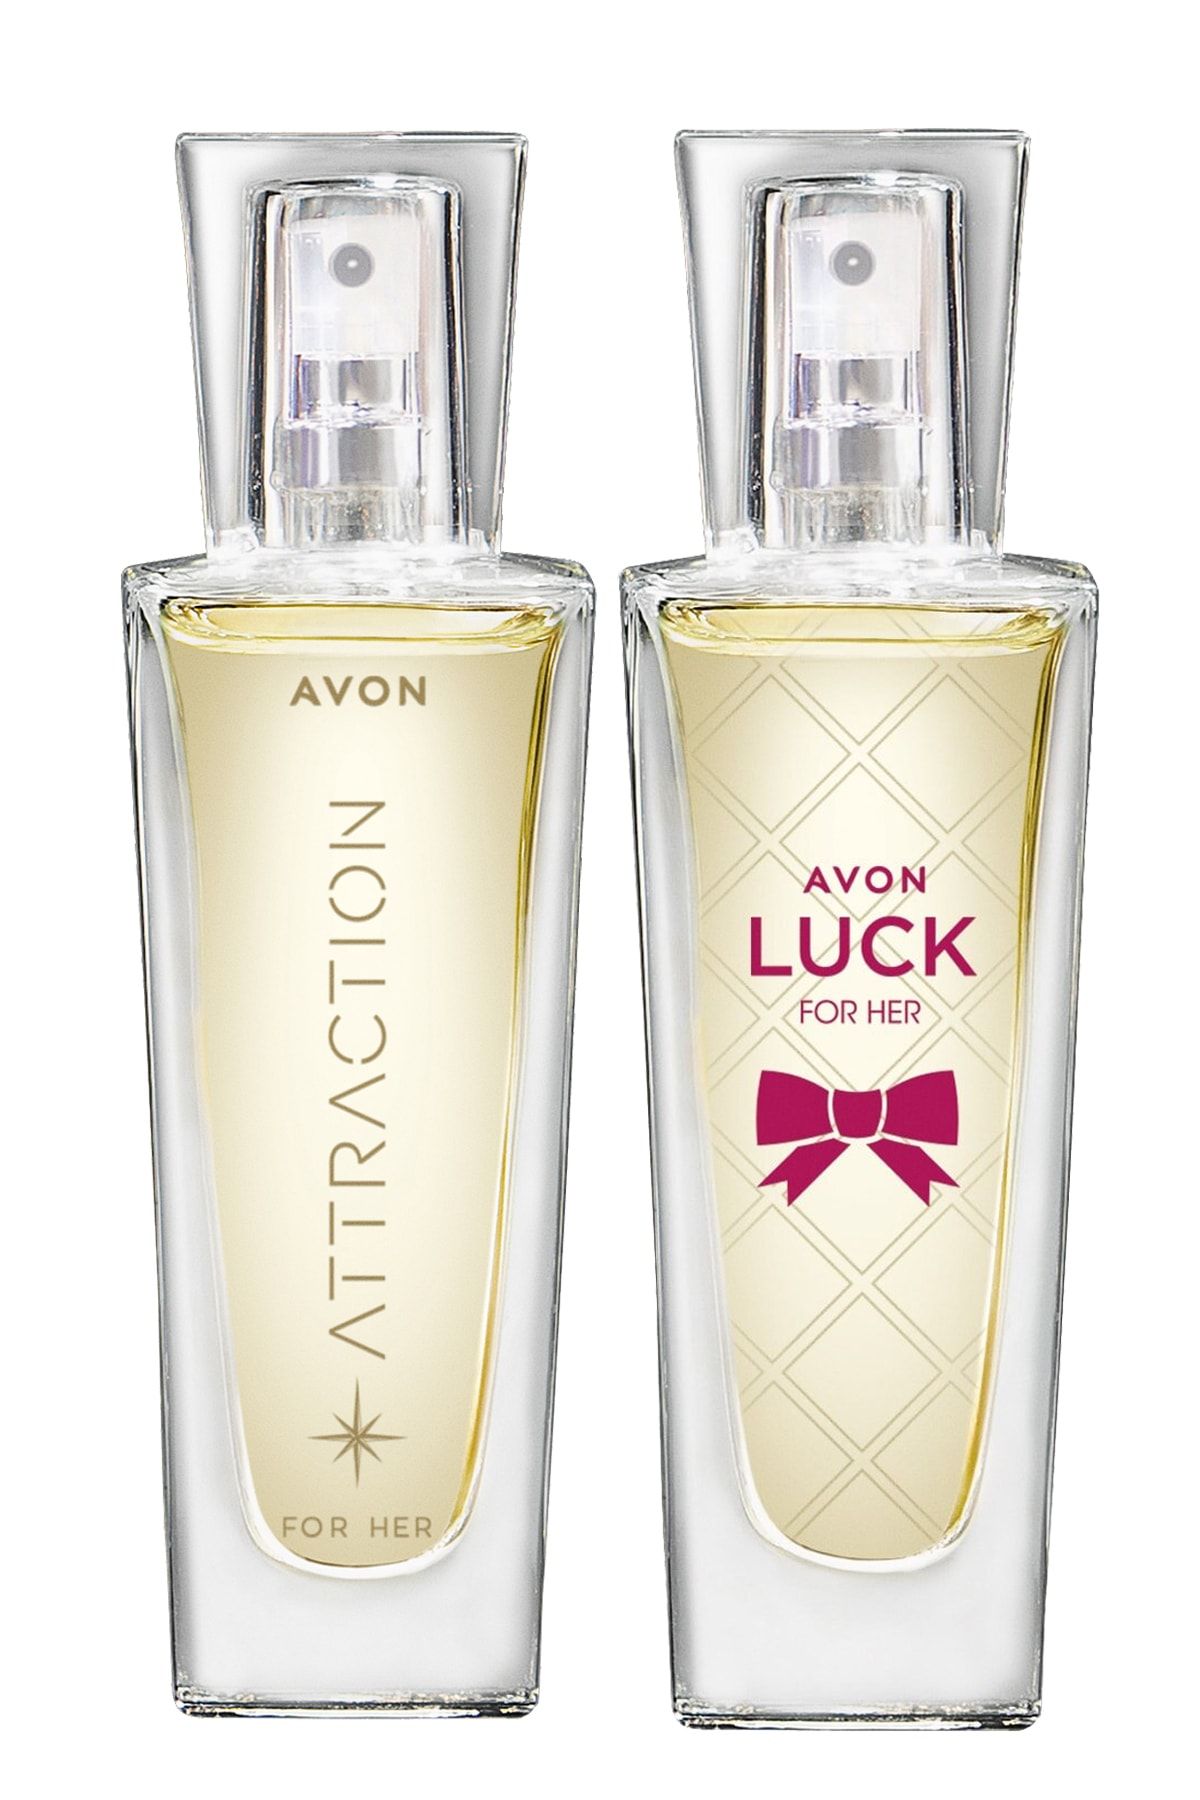 Avon Attraction Kadın Parfüm Edp 30 Ml. Ve Luck Kadın Parfüm Edp 30 Ml. Paketi